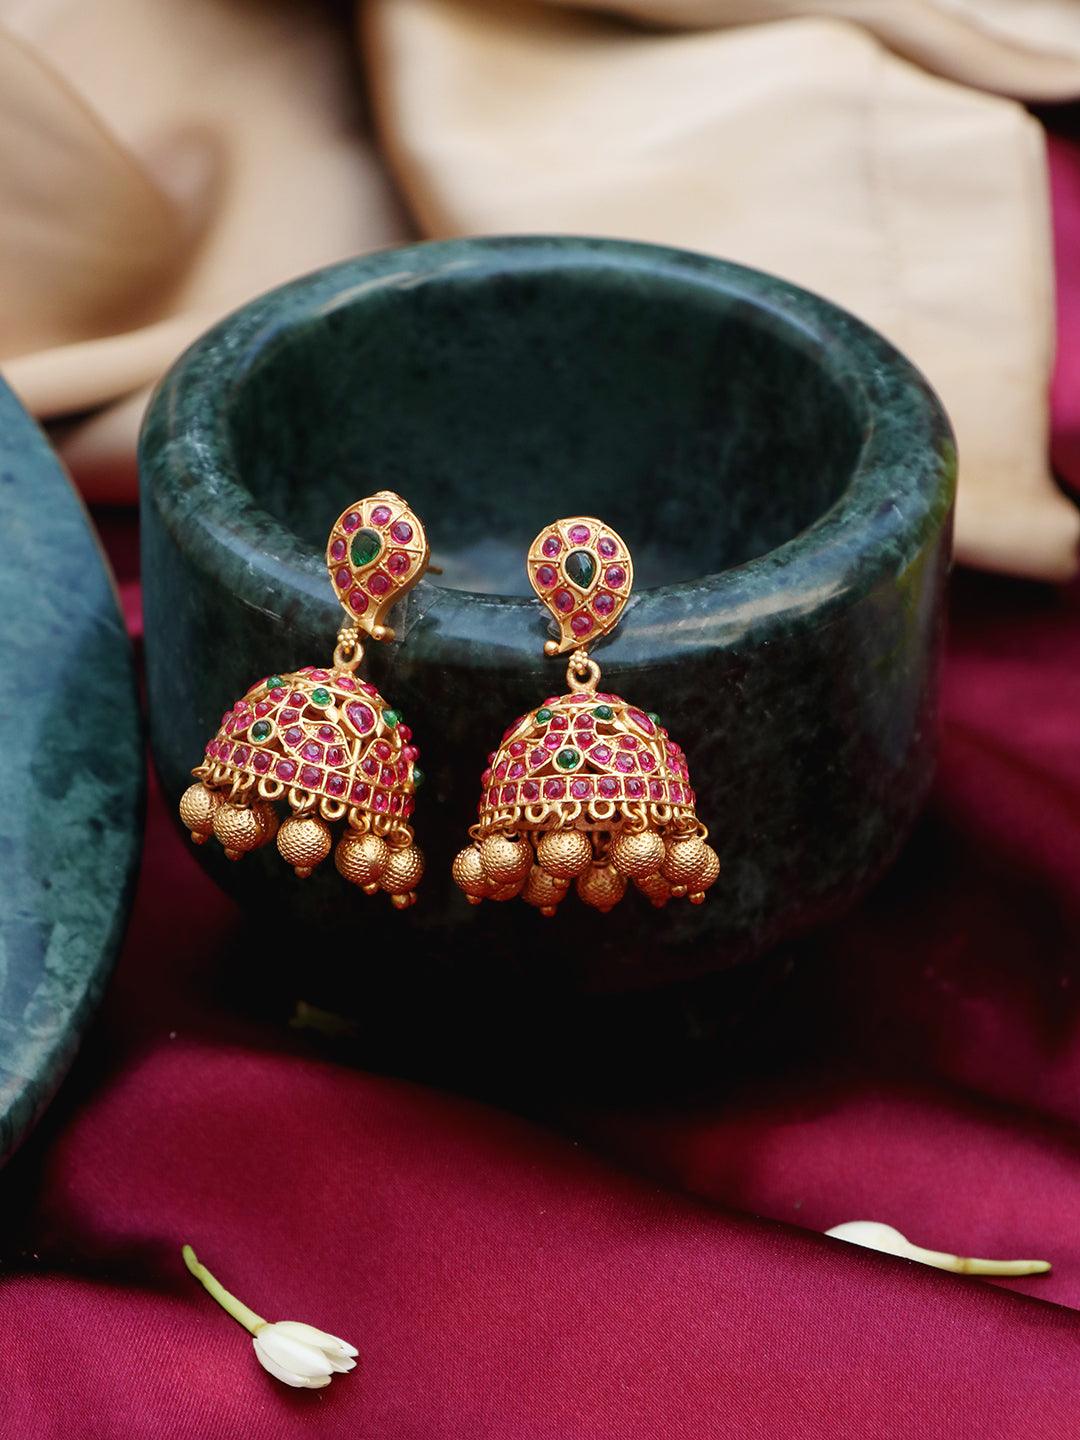 Ishhaara Lakshmi and Peacock Intricated Bridal Necklace Set